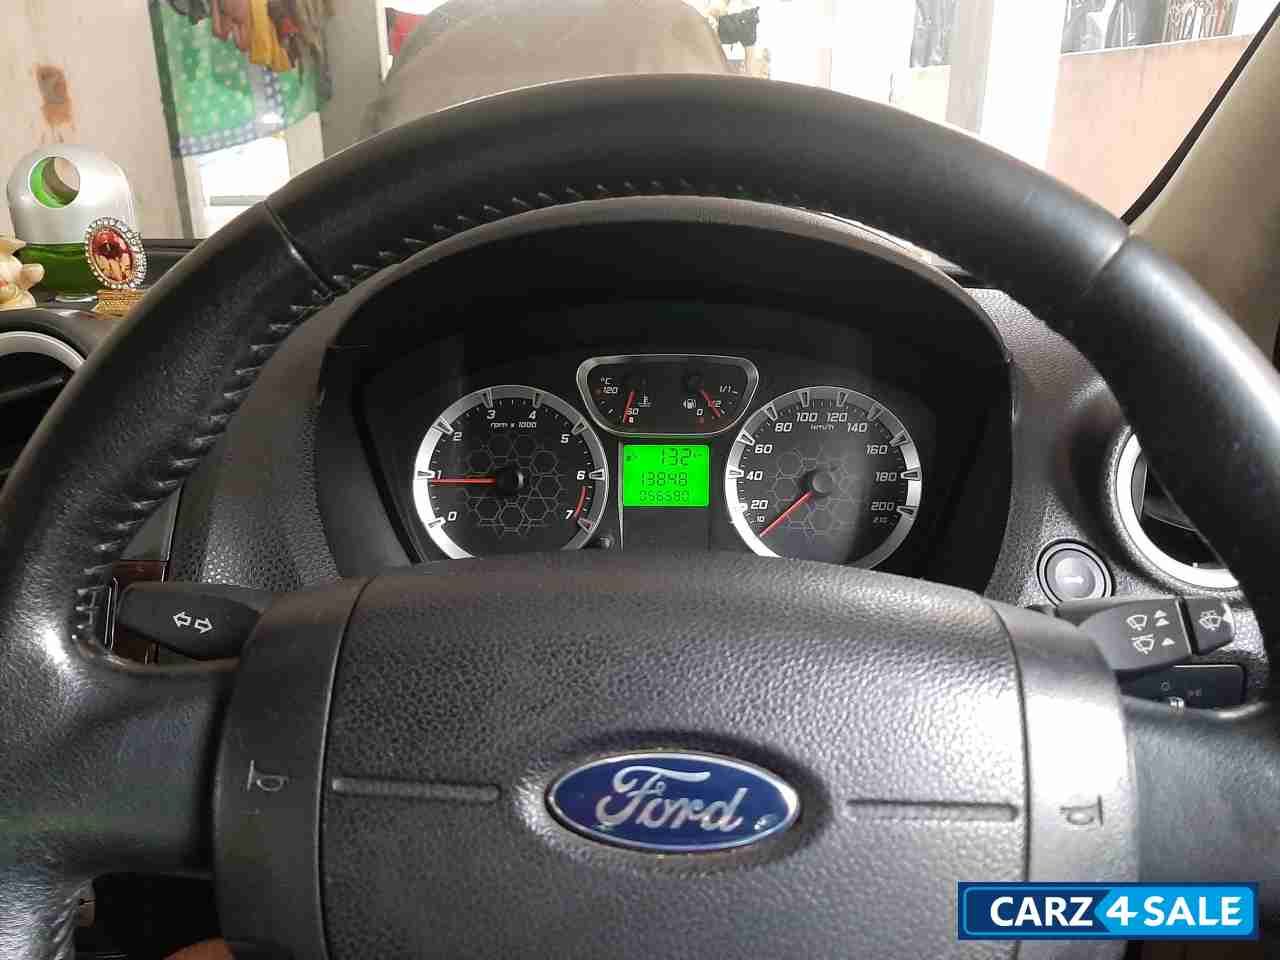 Sea Grey Ford Fiesta SXi 1.6 ABS